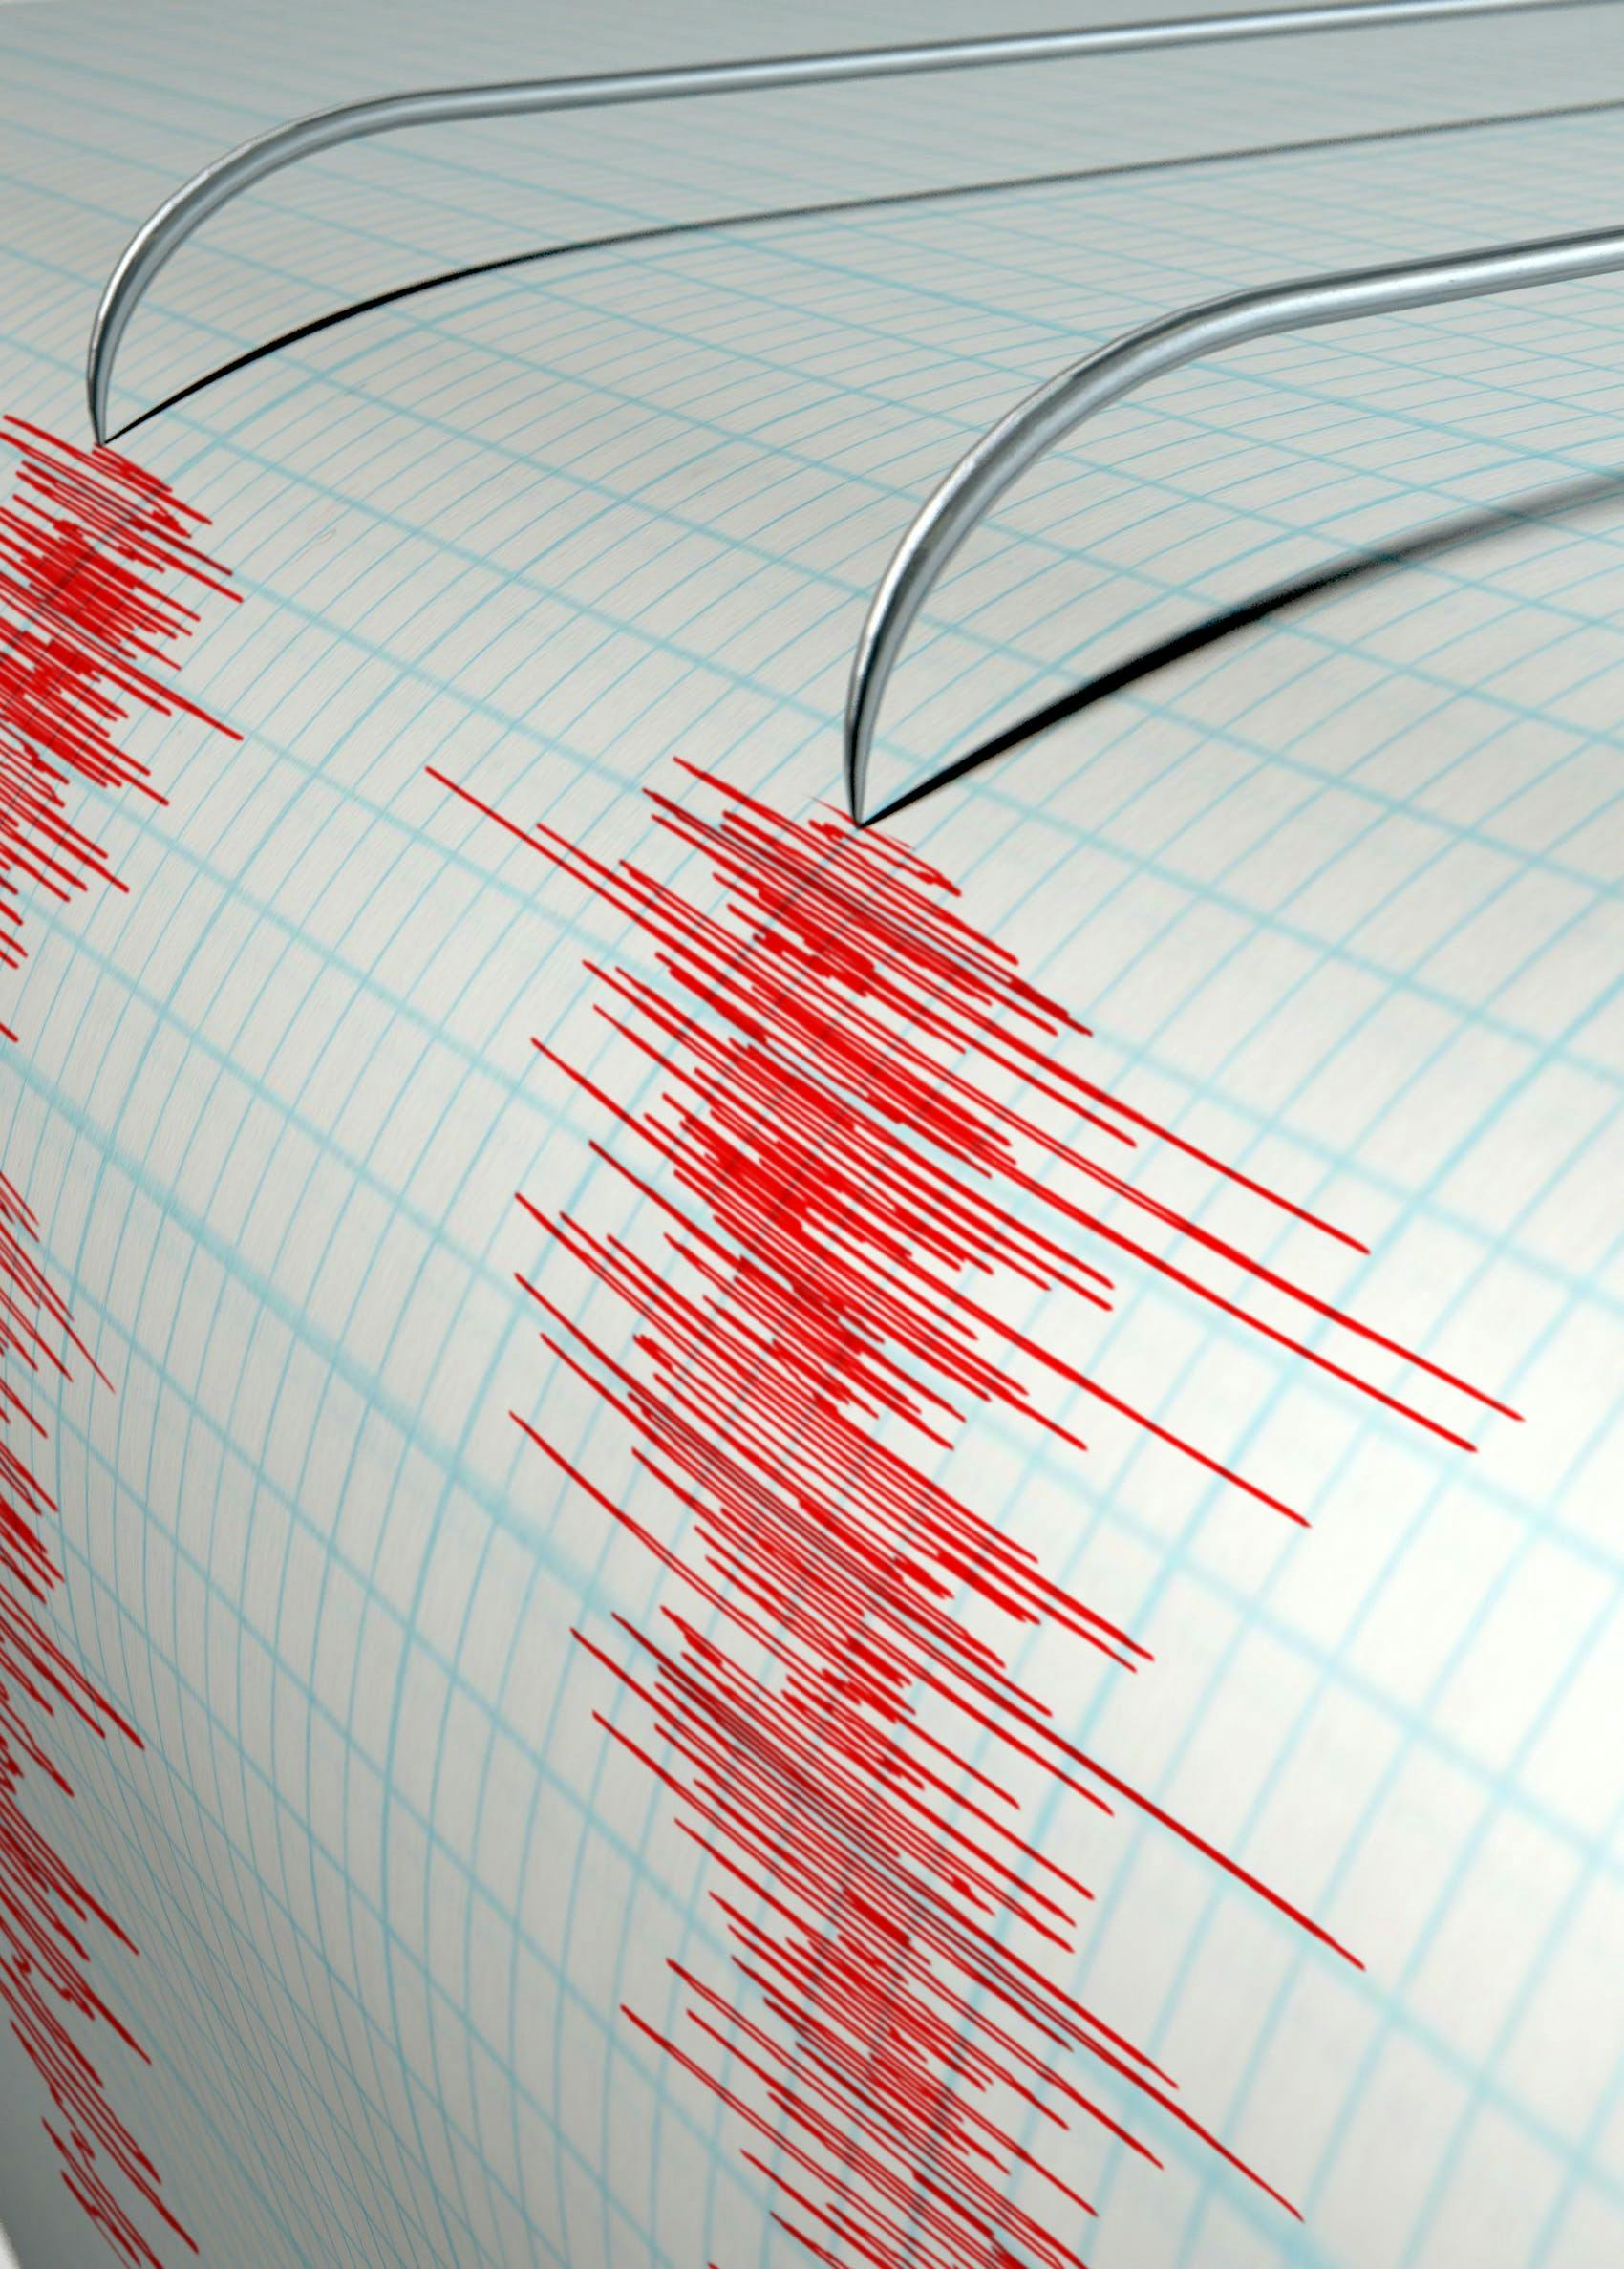 seismic analysis